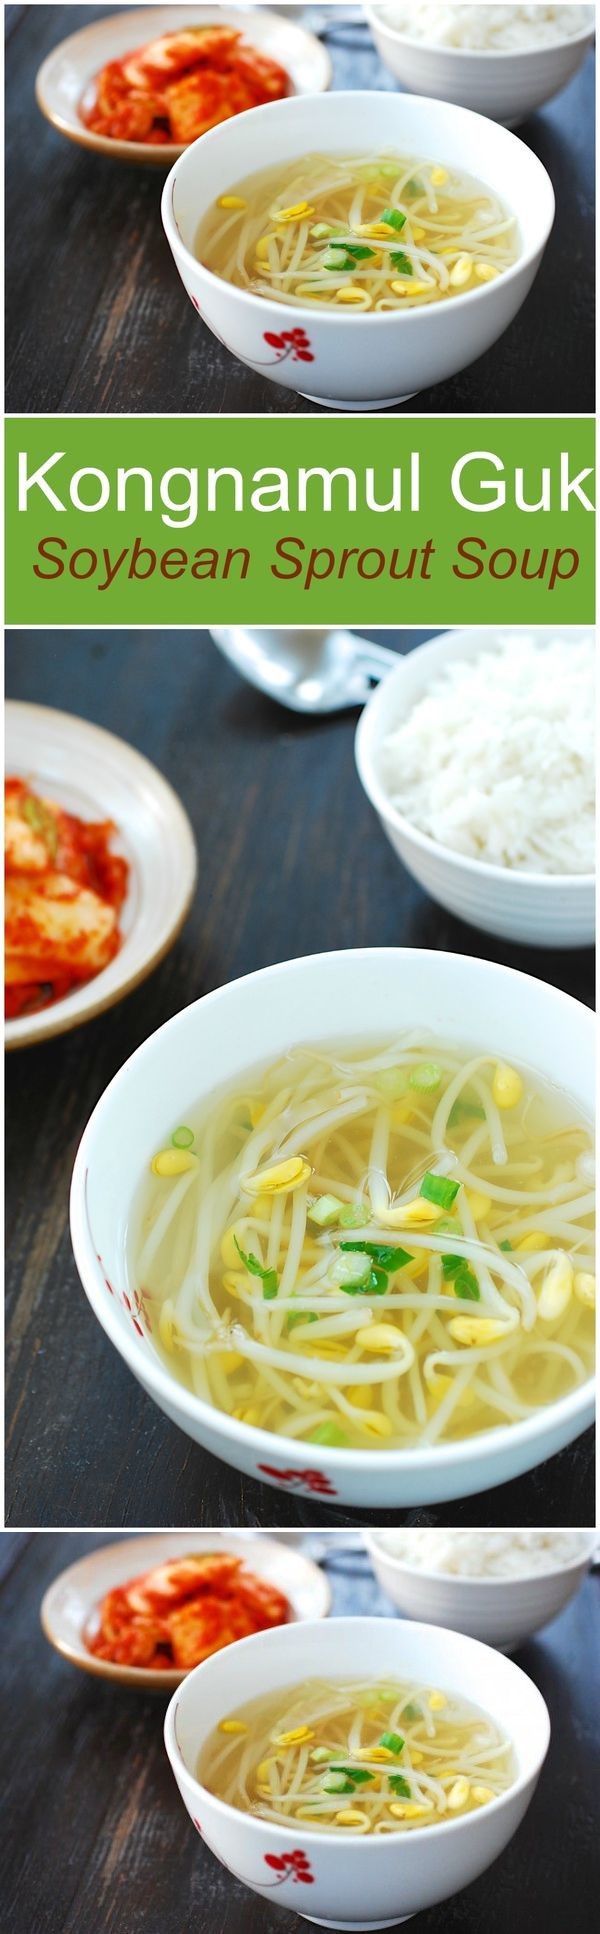 Kongnamul Guk (Soybean Sprout Soup